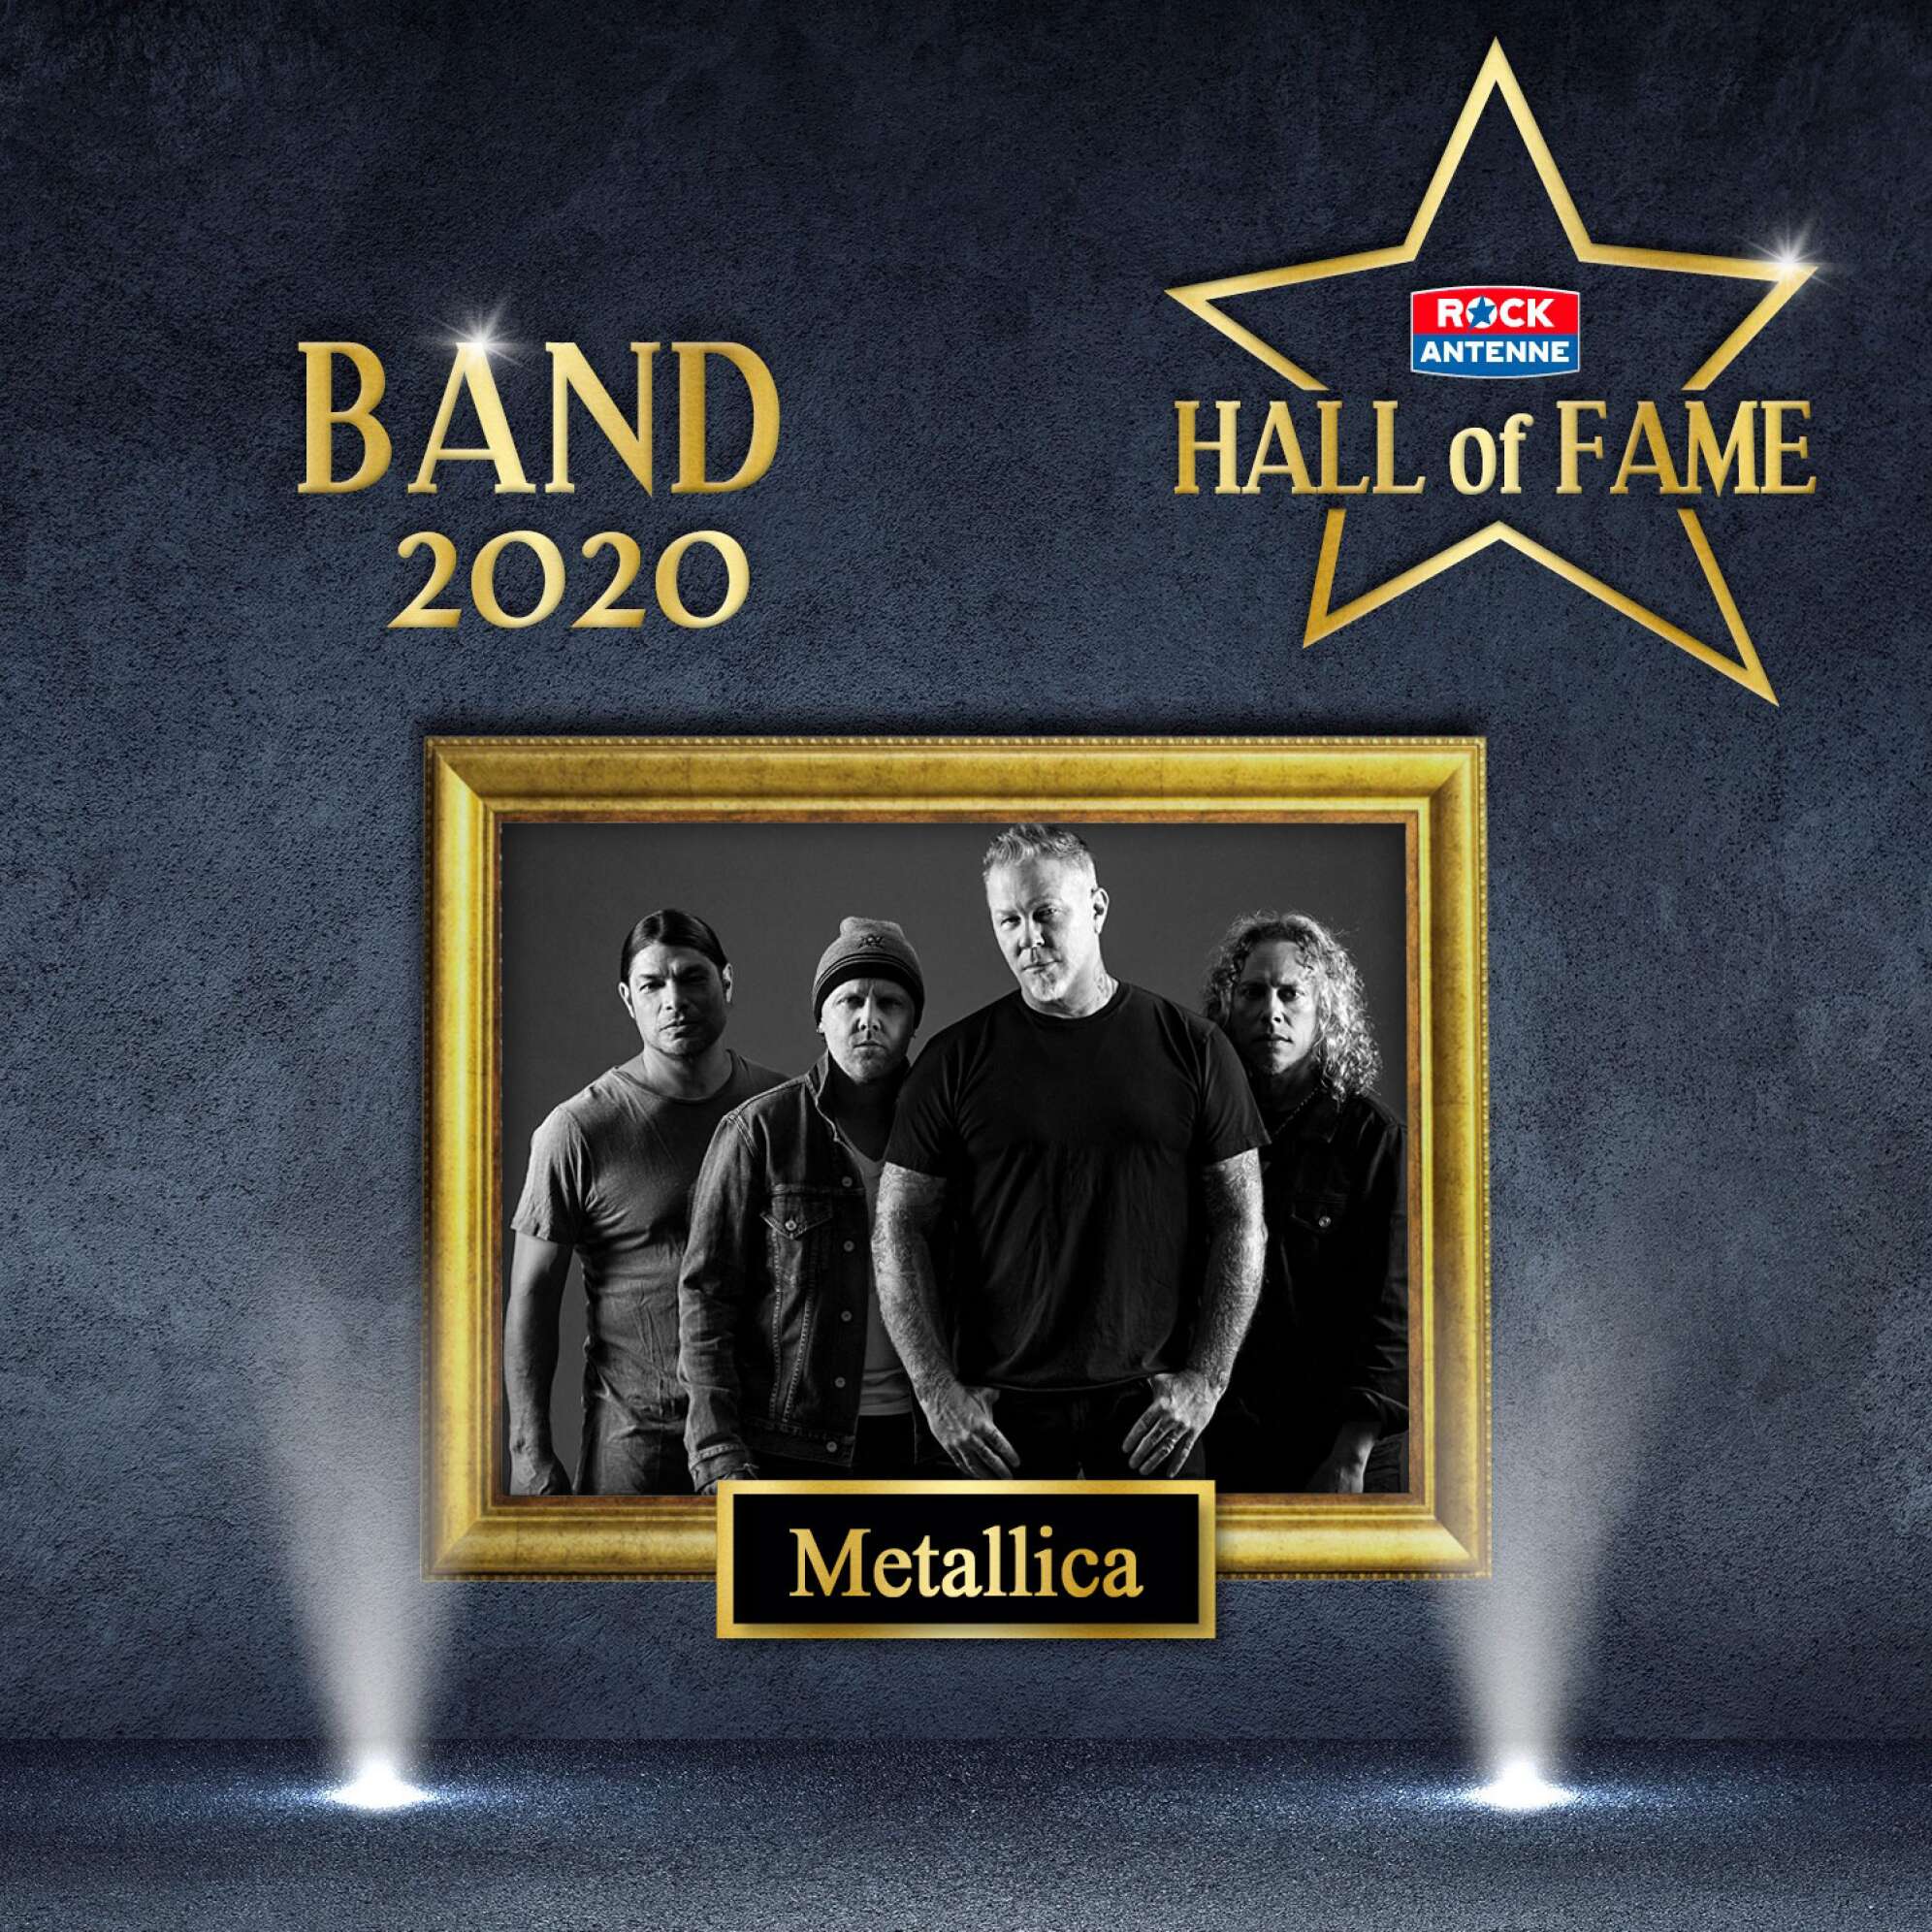 Bild der ROCK ANTENNE Hall of Fame - Gewinner Kategorie Band 2020: Metallica